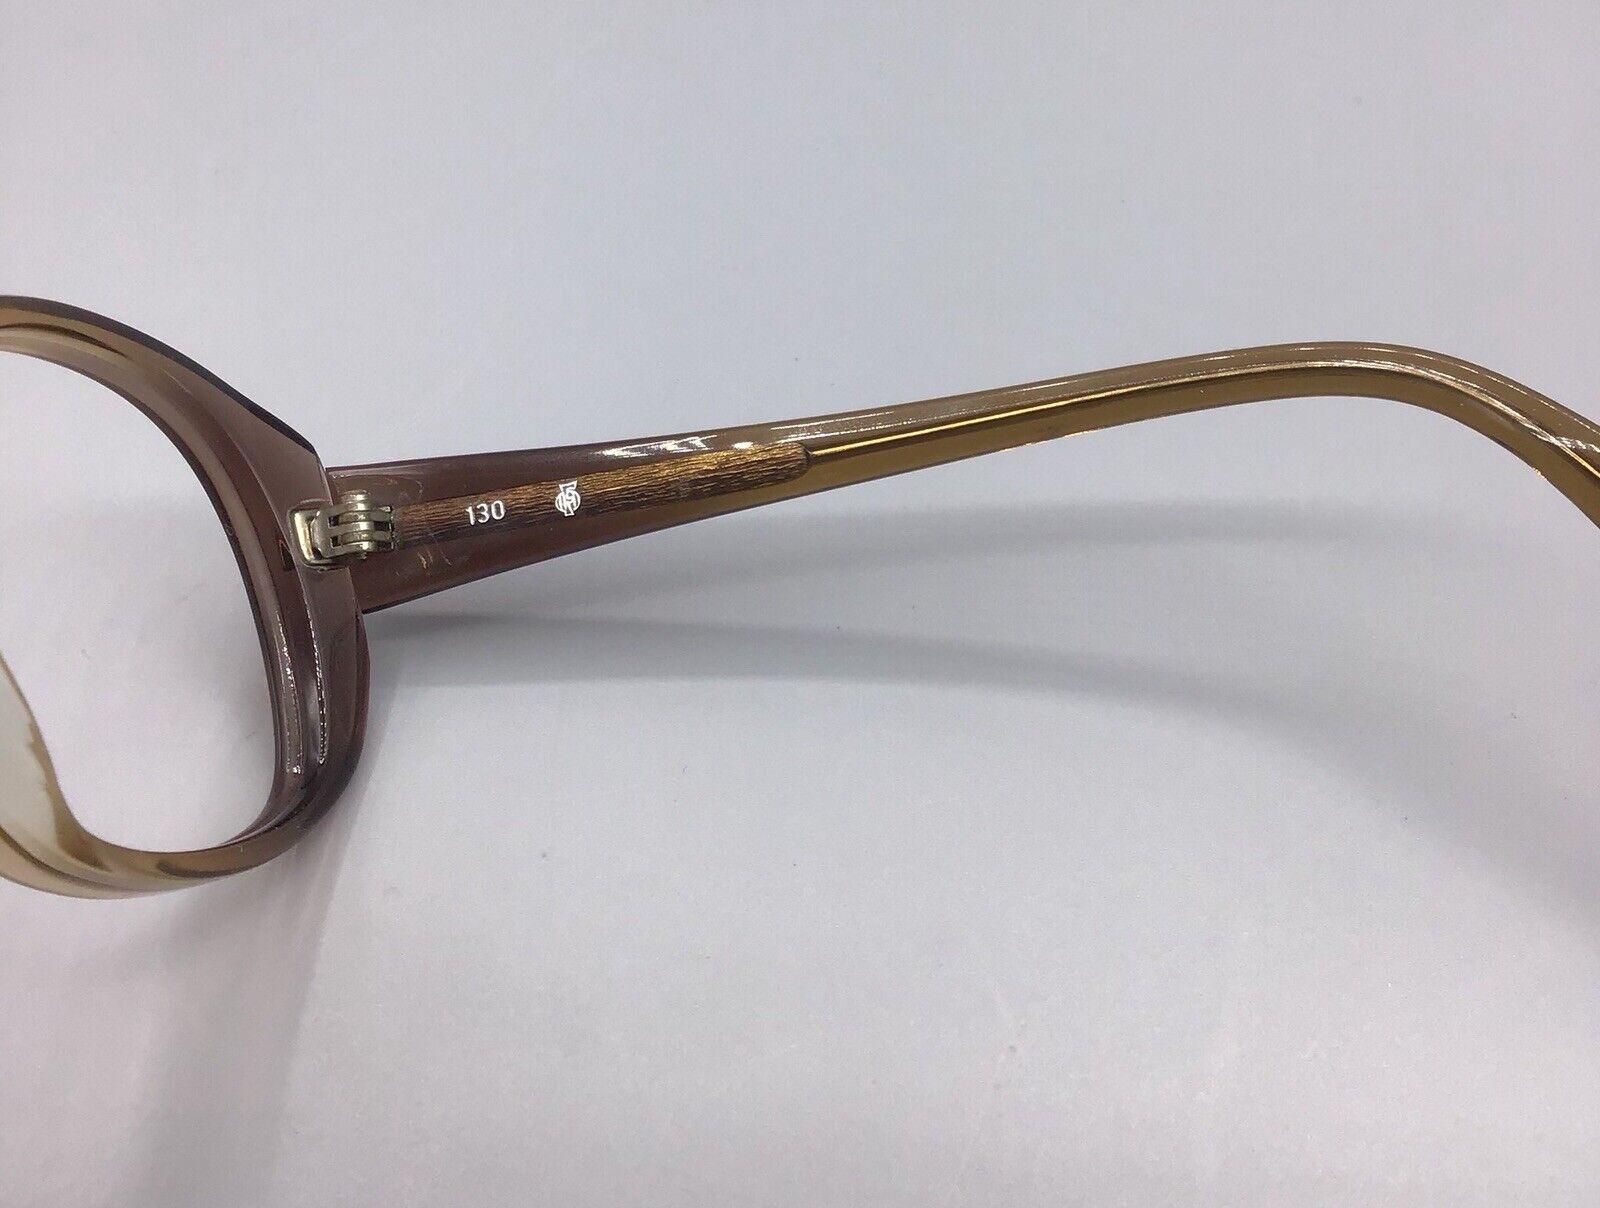 Metzler Germany 5475 748 occhiale vintage eyewear frame brillen lunettes